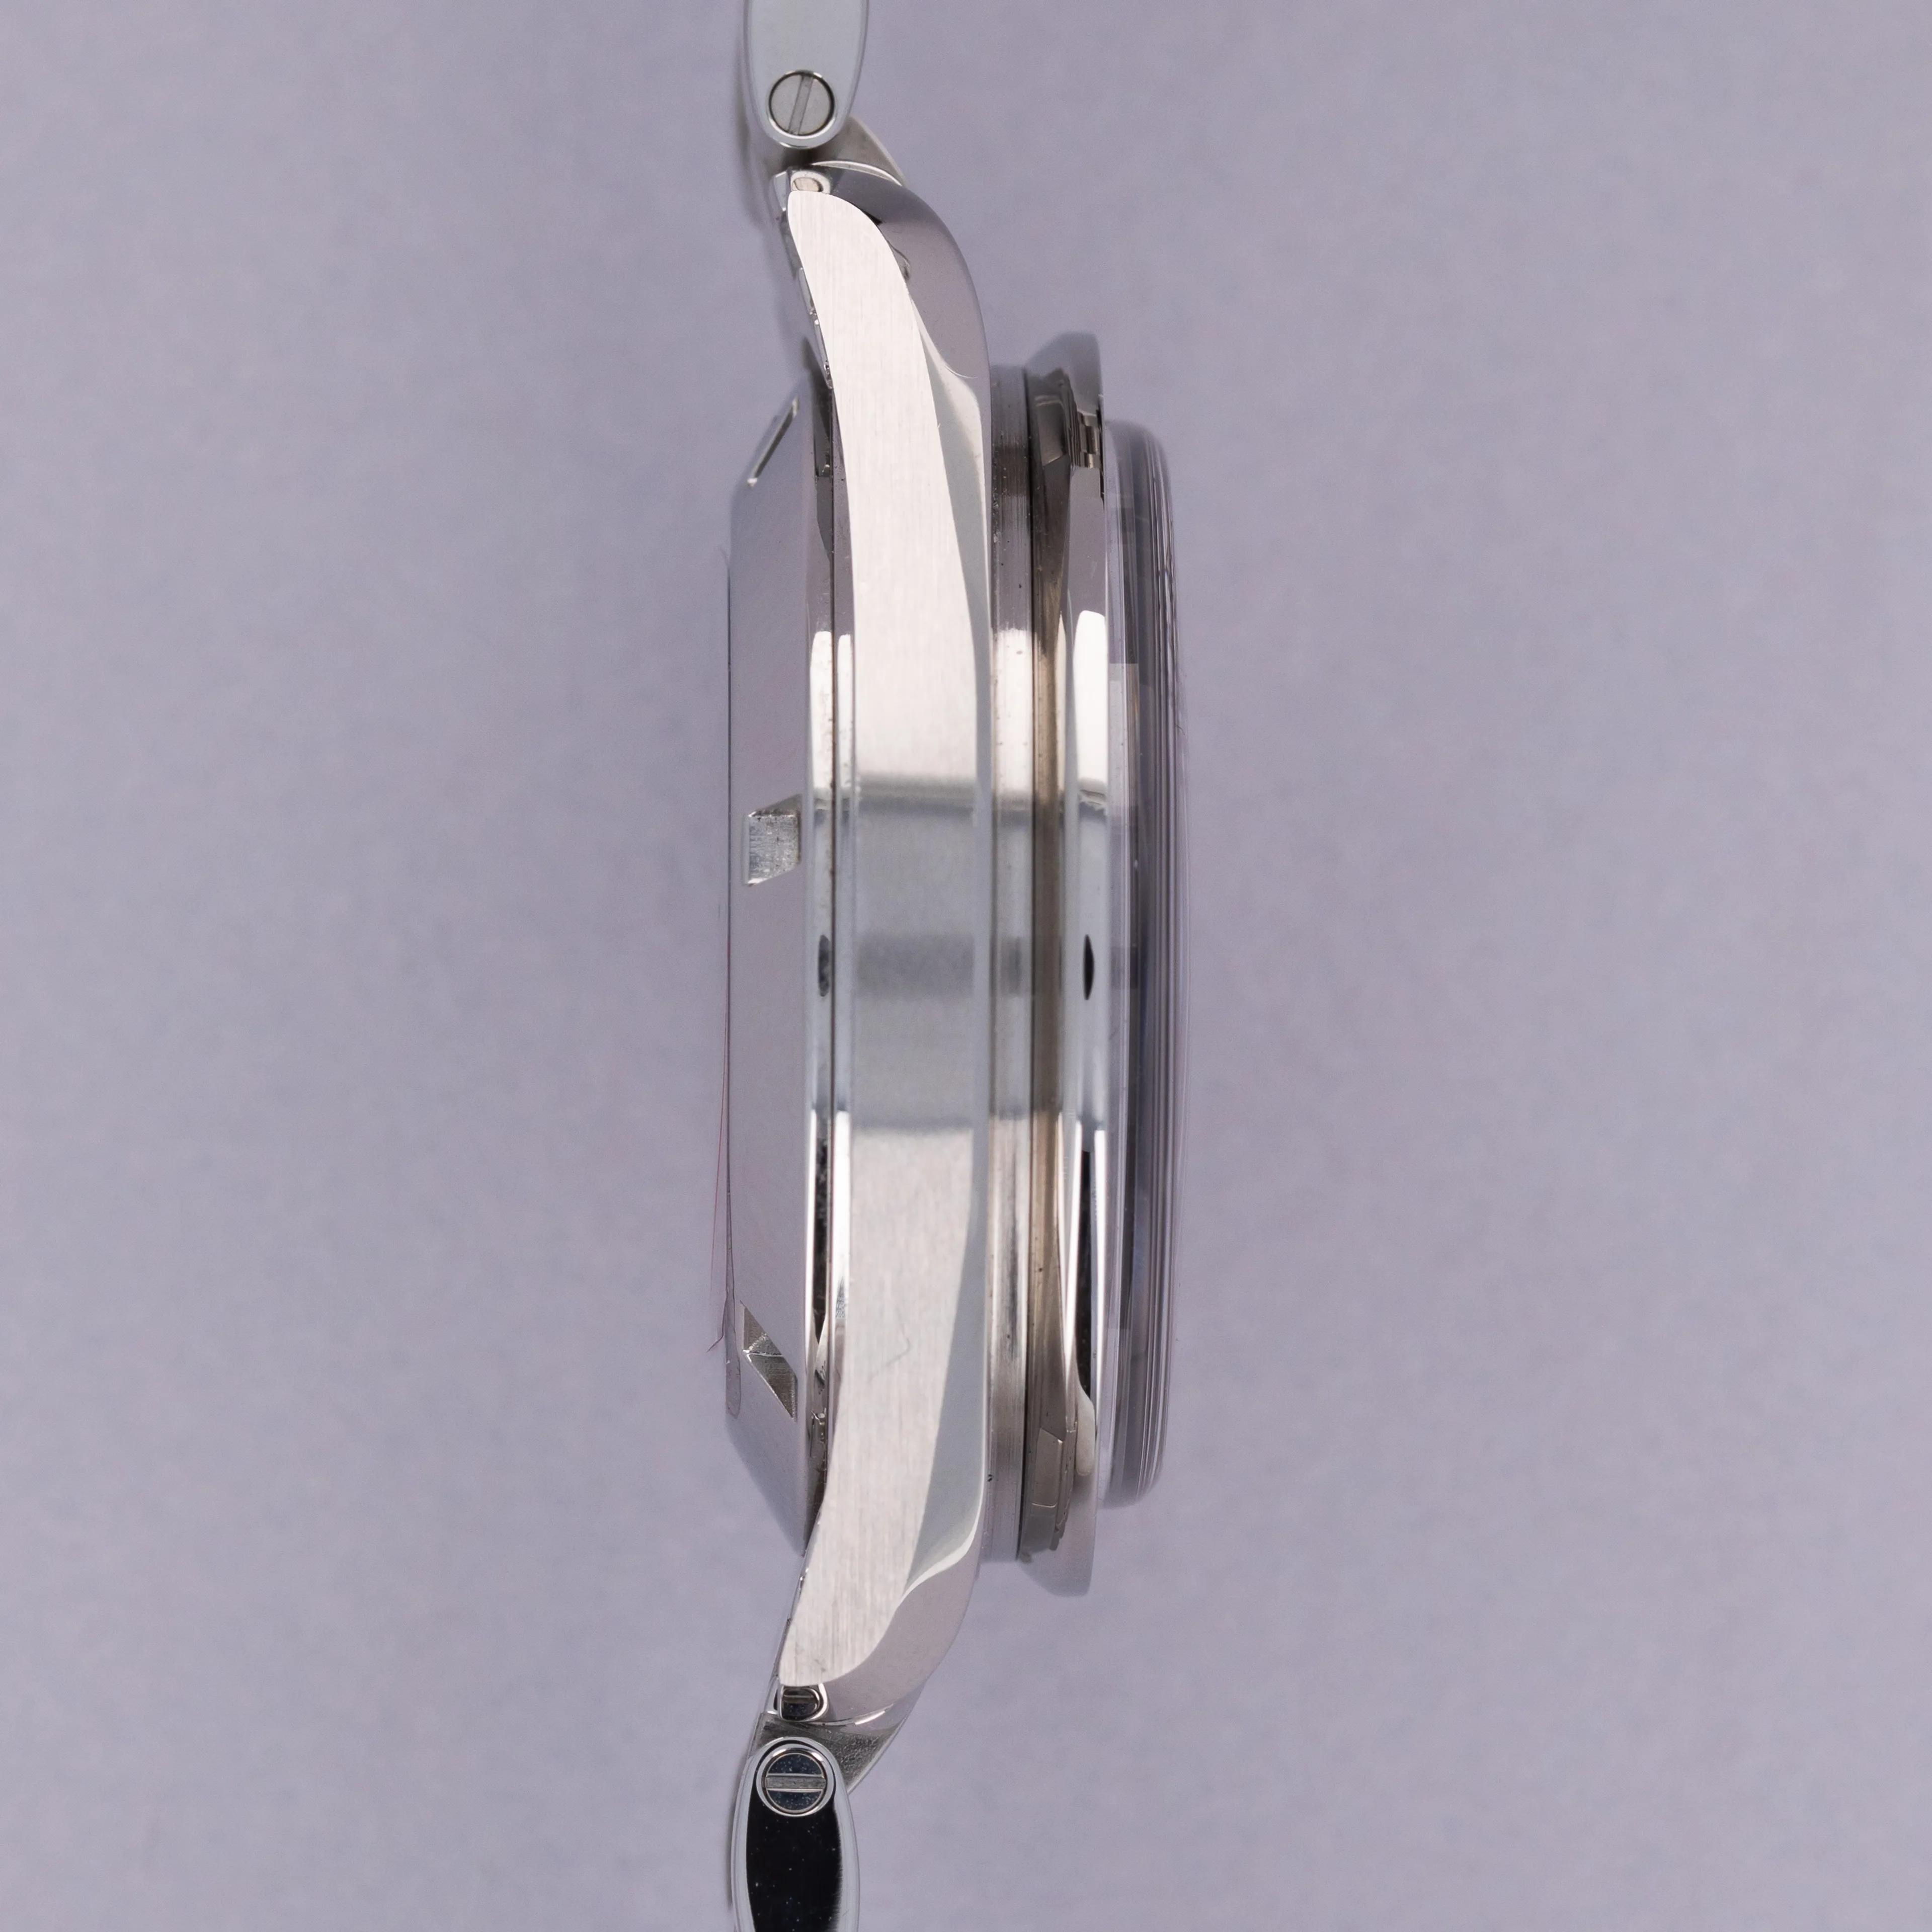 Omega Speedmaster Moon watch 311.30.42.30.99.002 42mm Stainless steel Silver 4